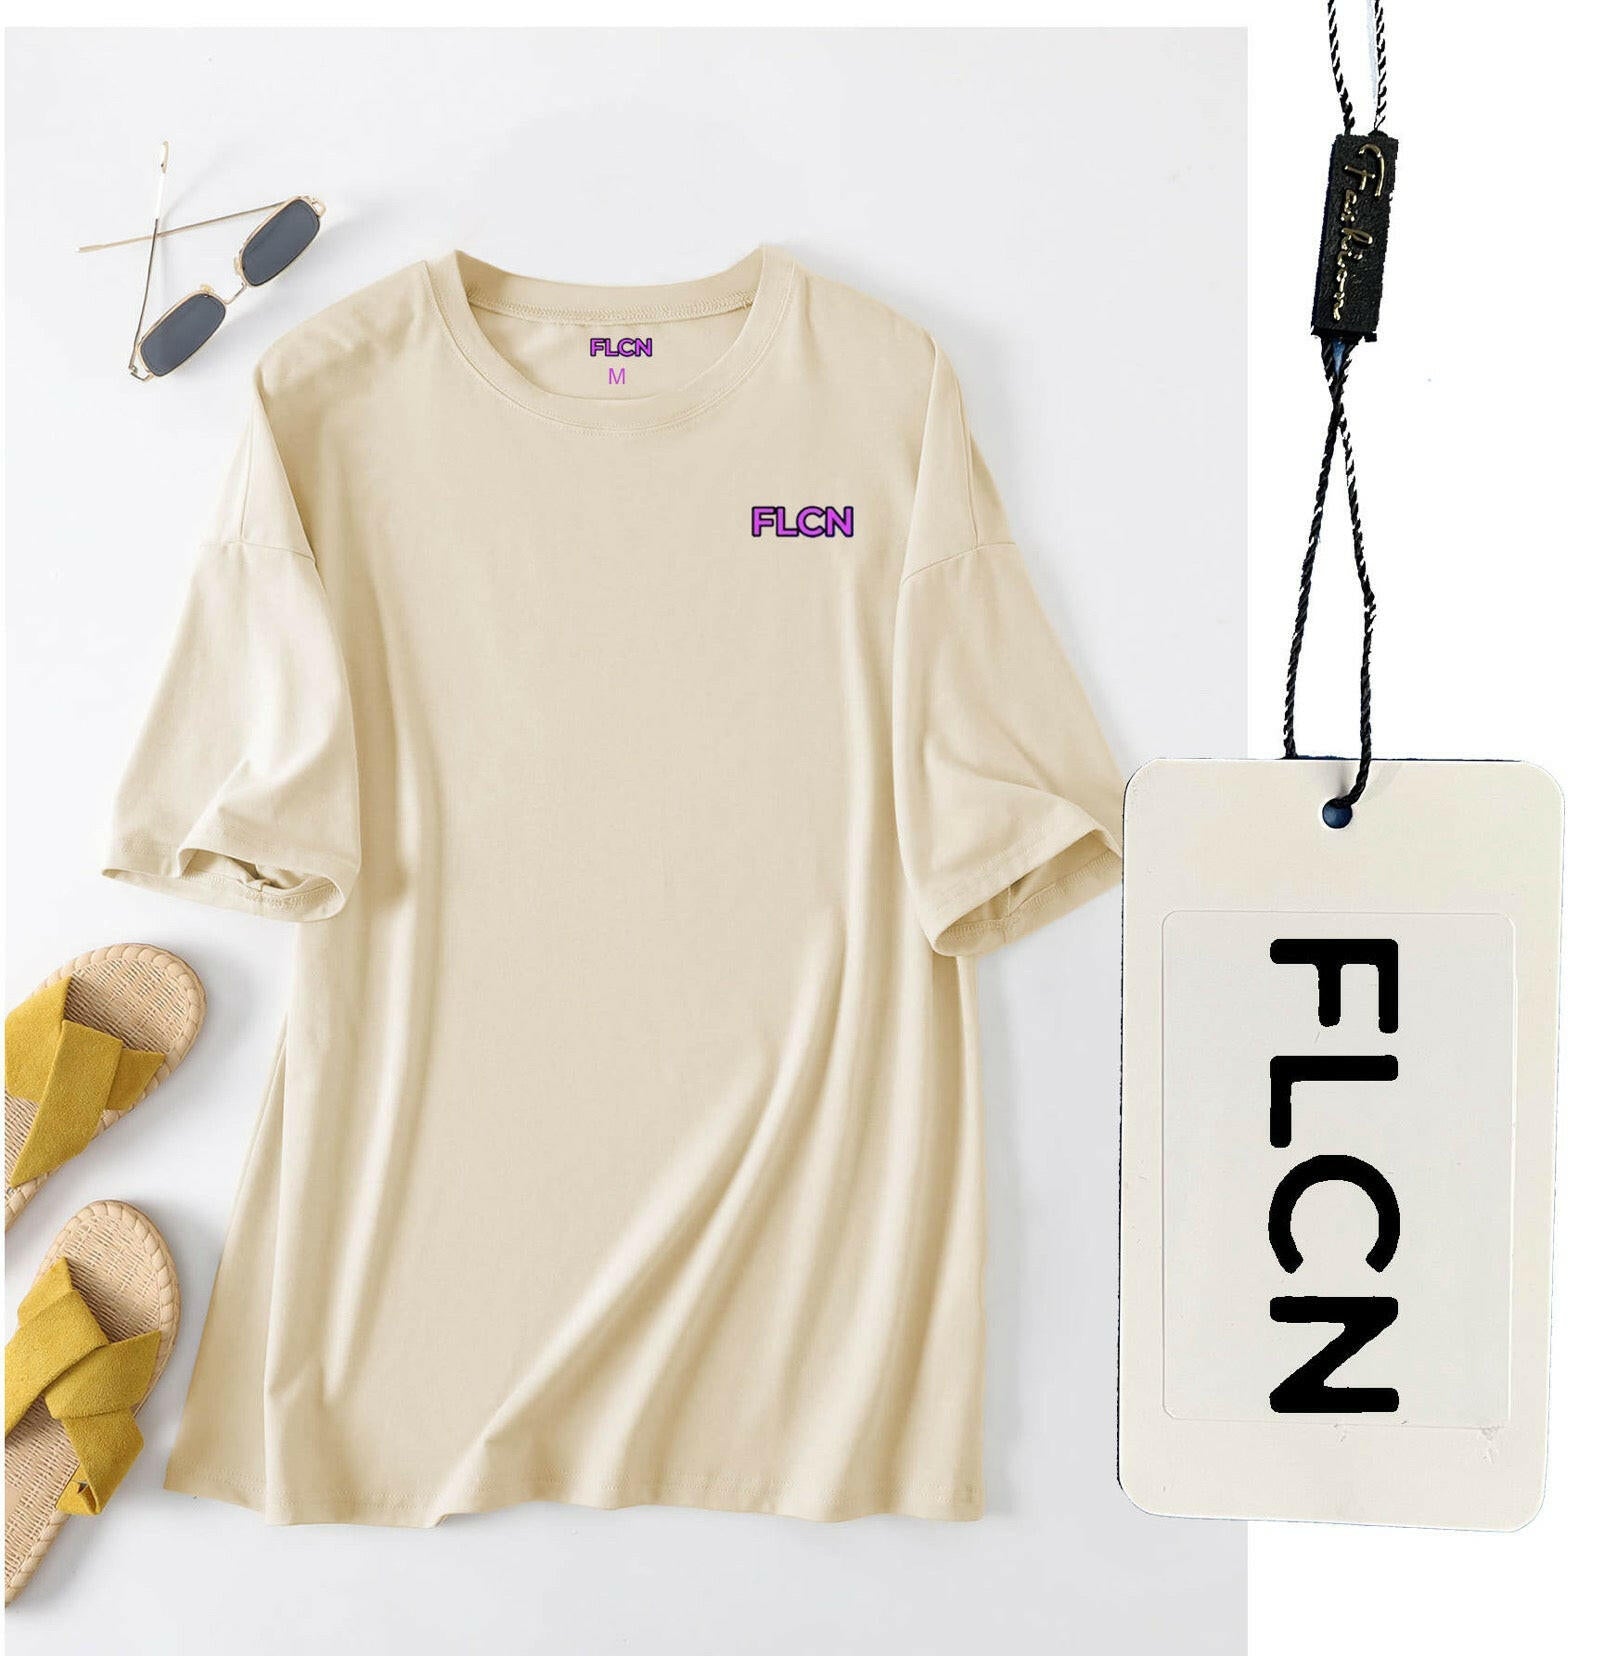 FLCN oversized tee shirt.